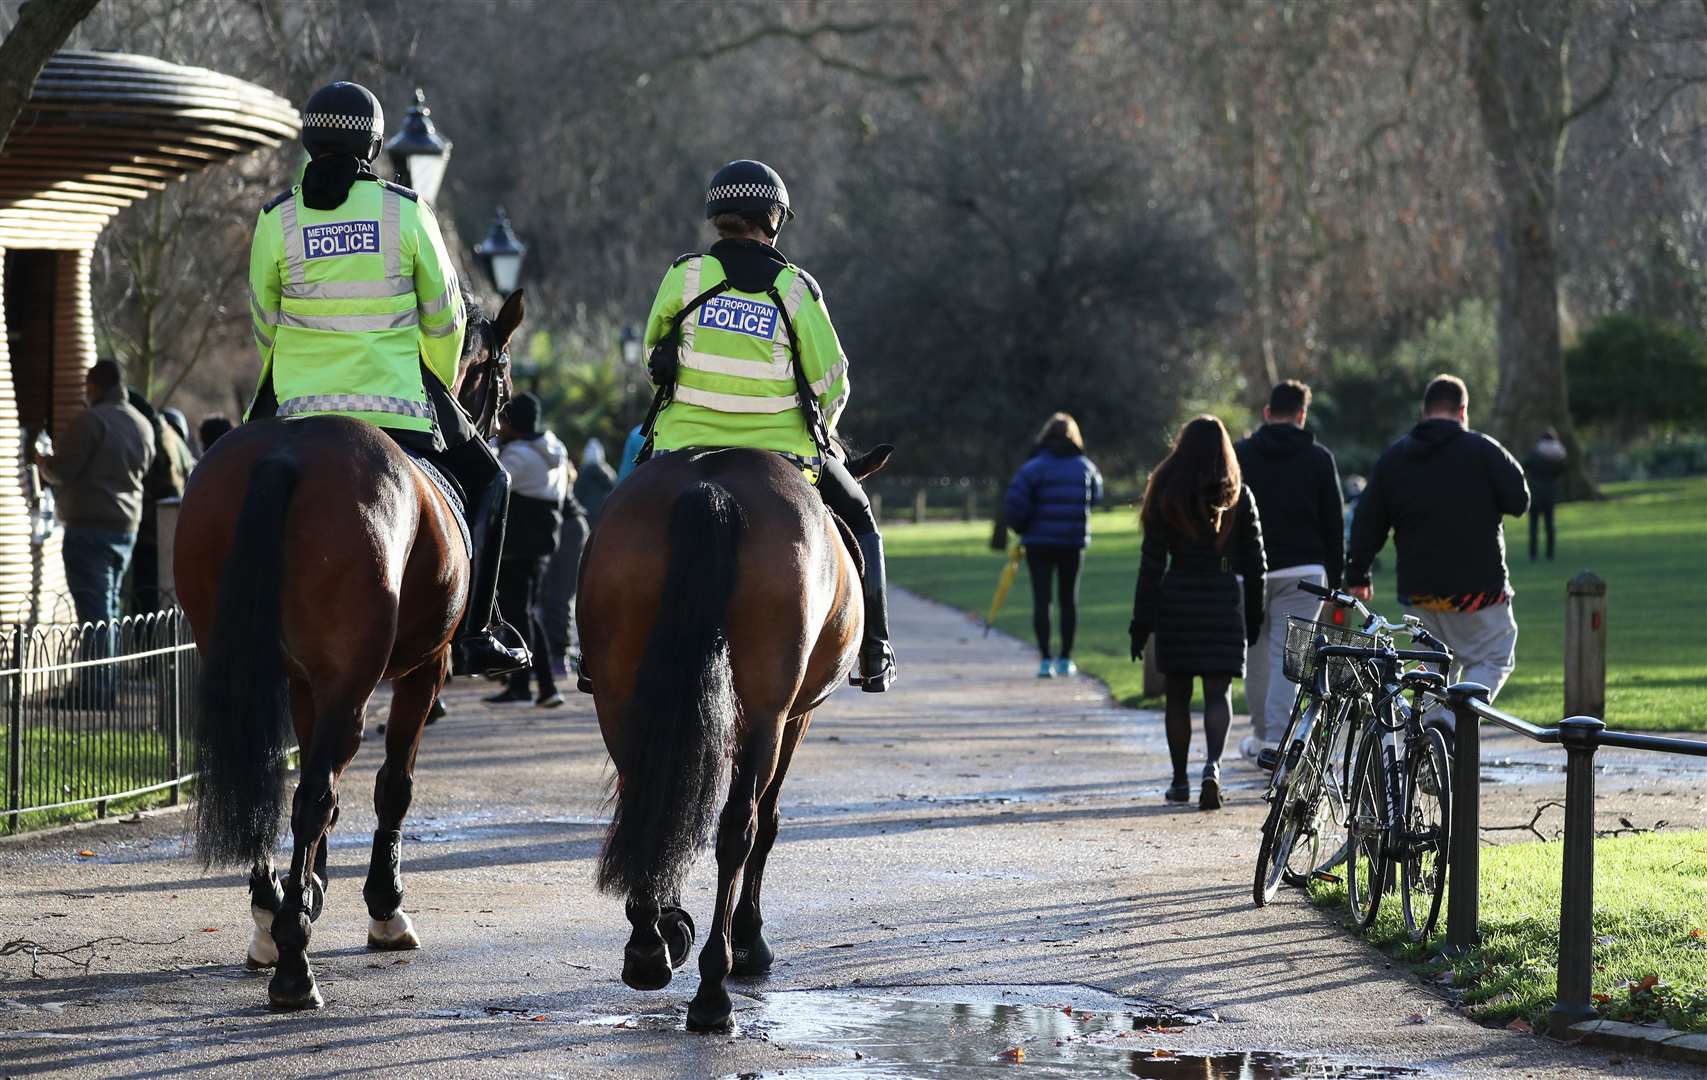 Police patrol on horseback through St James’ Park in London (Andrew Matthews/PA)